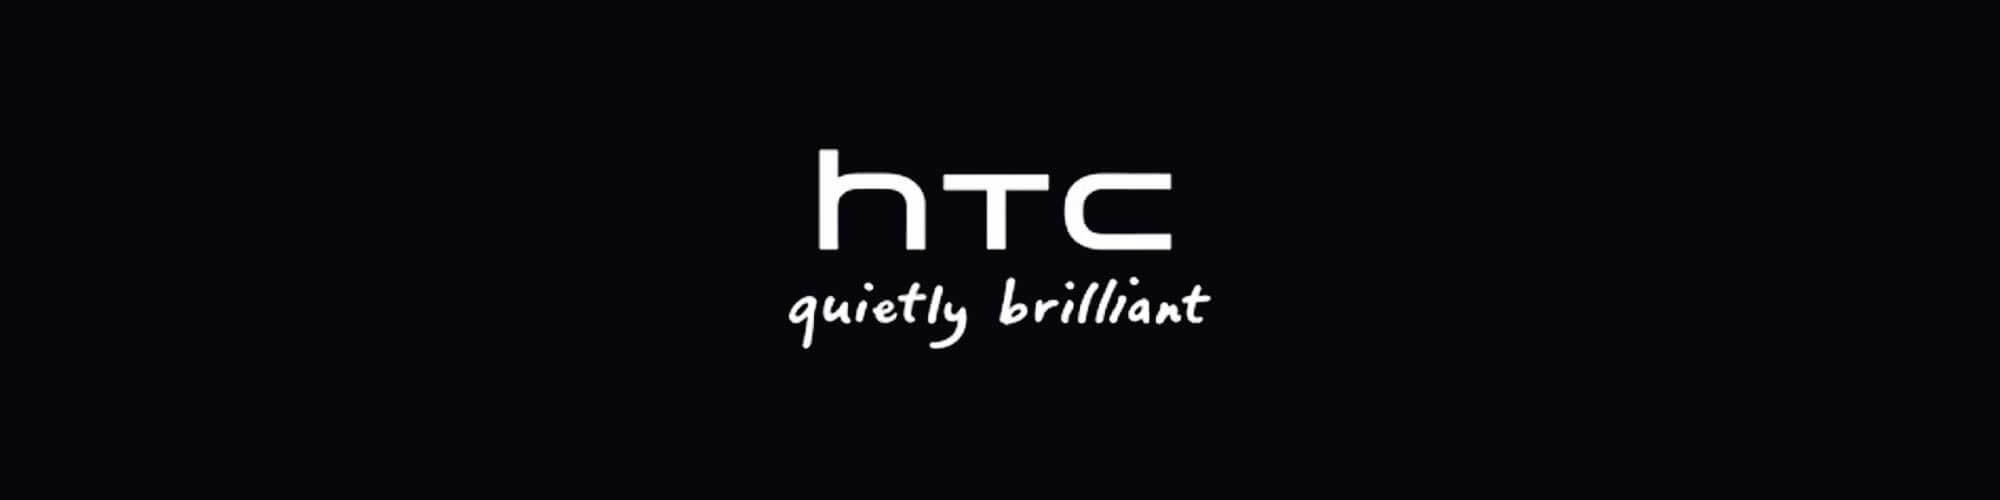  HTC   1.500 !!!